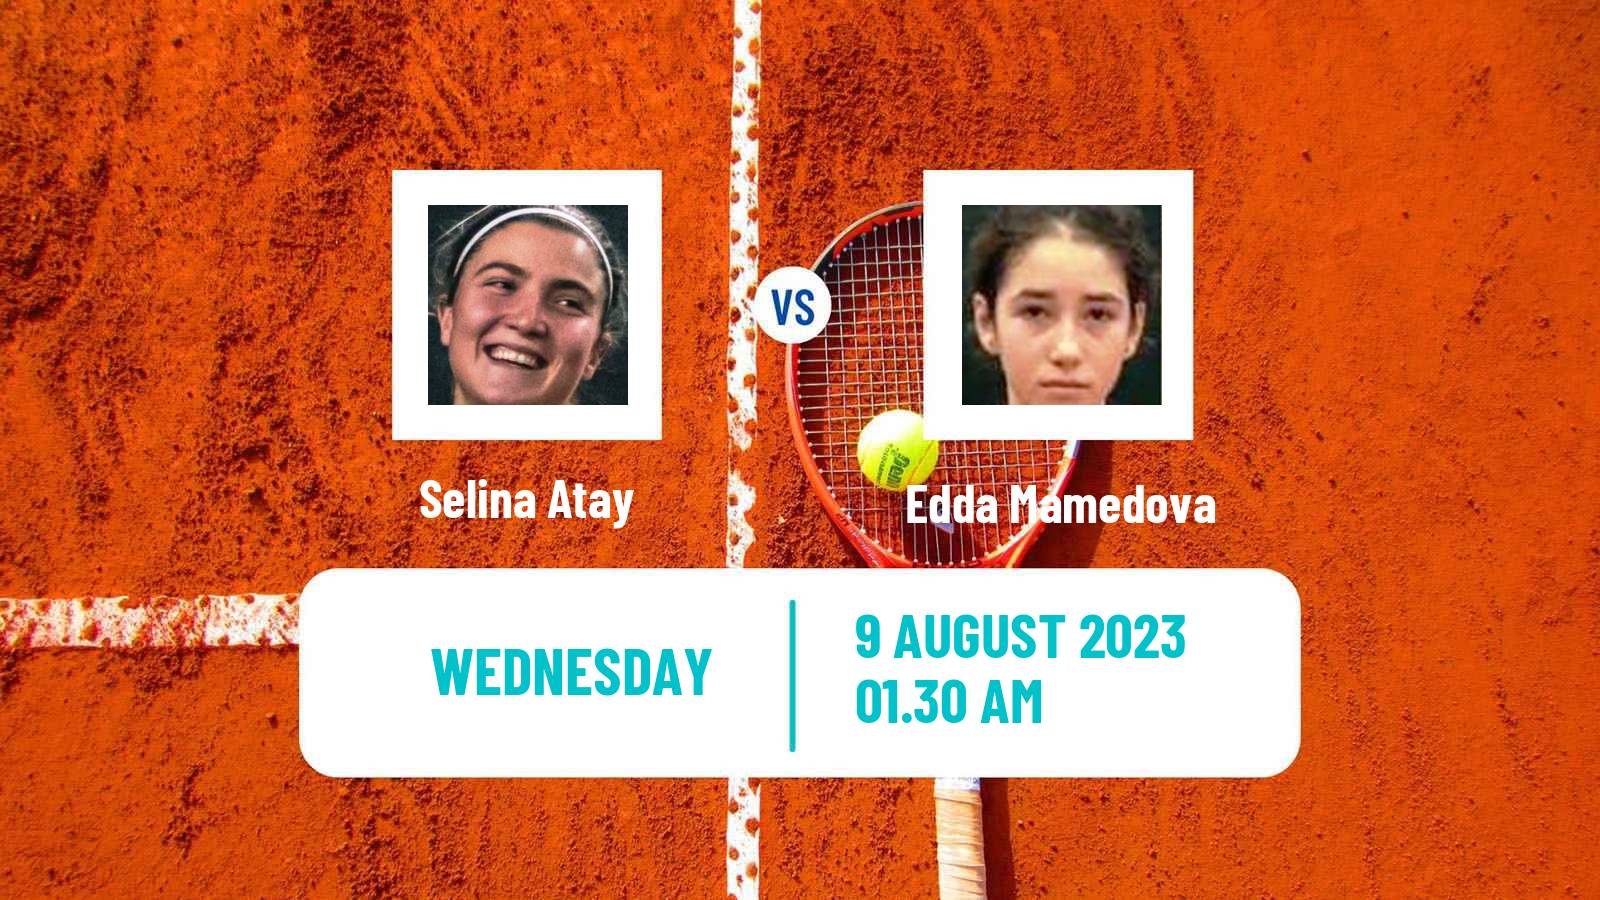 Tennis ITF W15 Ust Kamenogorsk Women Selina Atay - Edda Mamedova